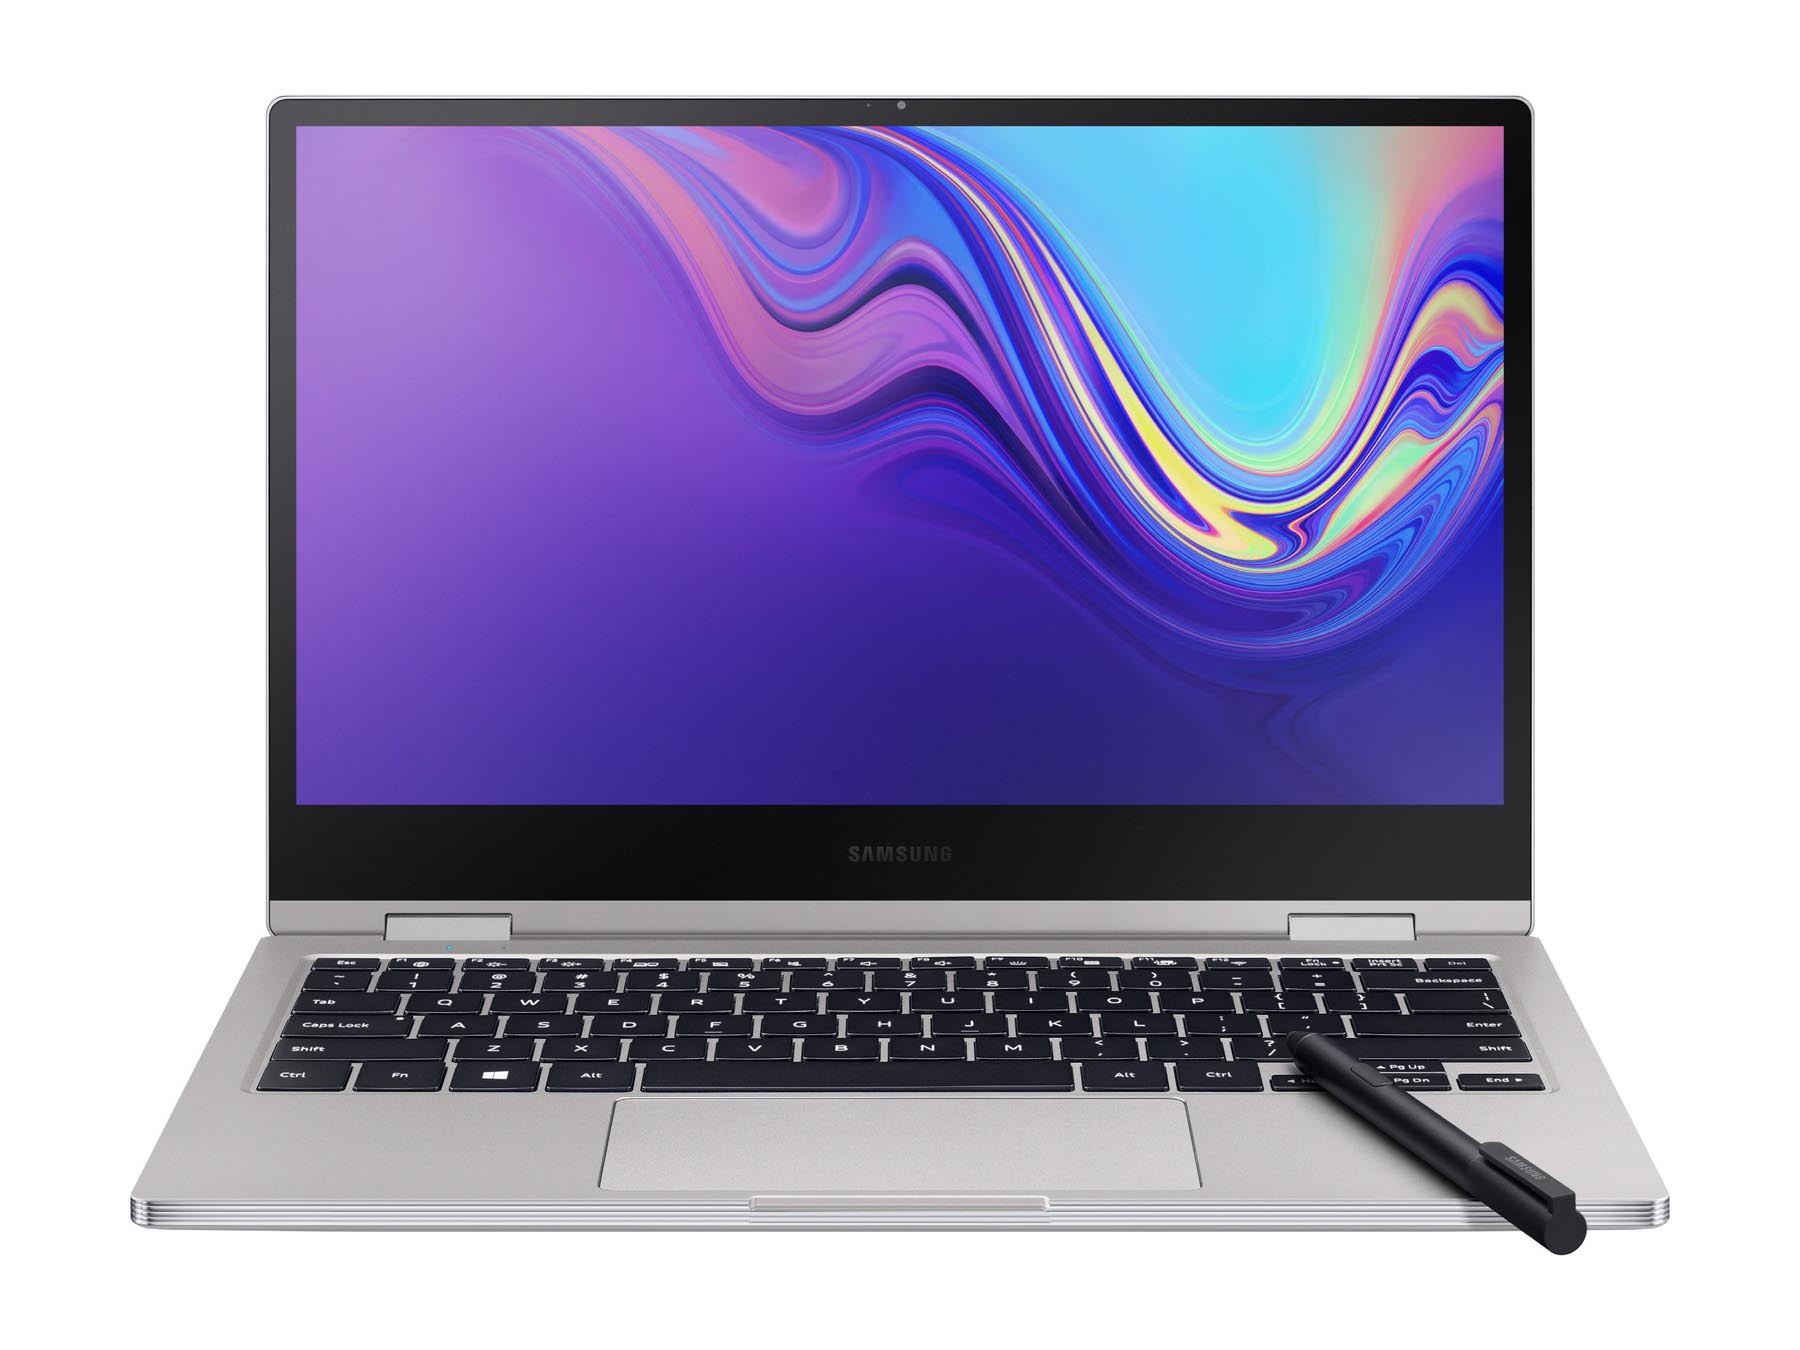 Samsung Notebook 9 Pro 13 inch 2019 - Notebookcheck-tr.com